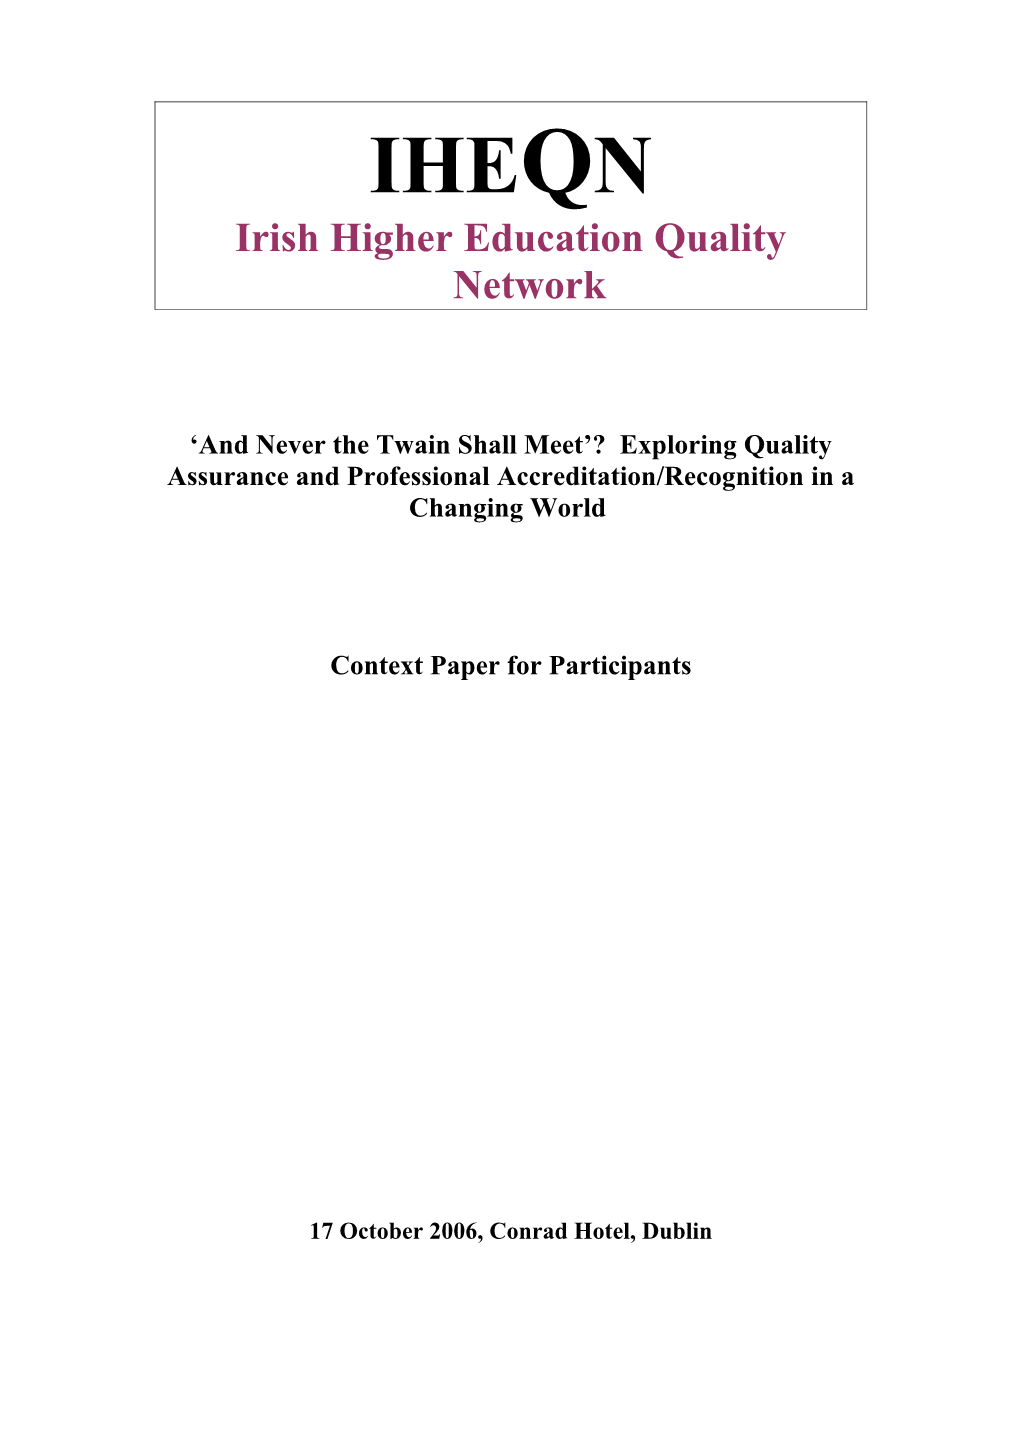 Irish Higher Education Quality Network